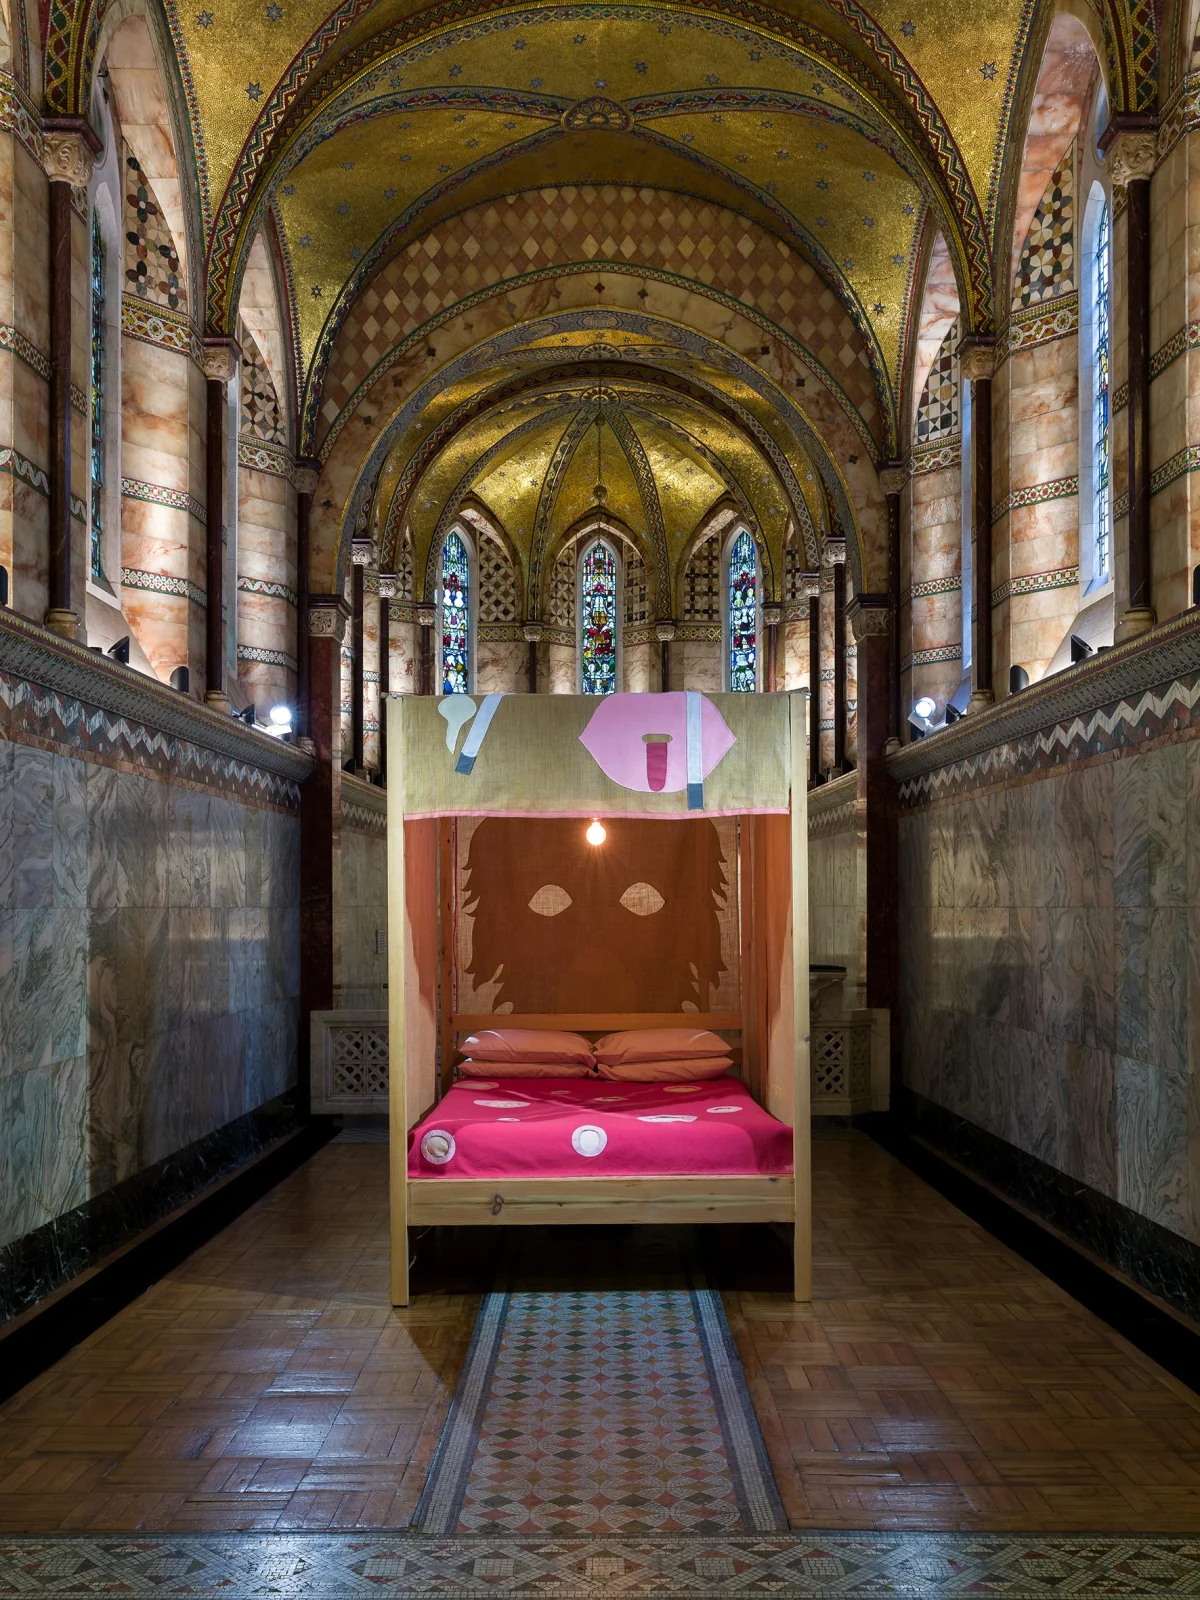 <p><span>'Jonathan Baldock at Fitzrovia Chapel', Fitzrovia Chapel, London, UK, 2019</span></p>